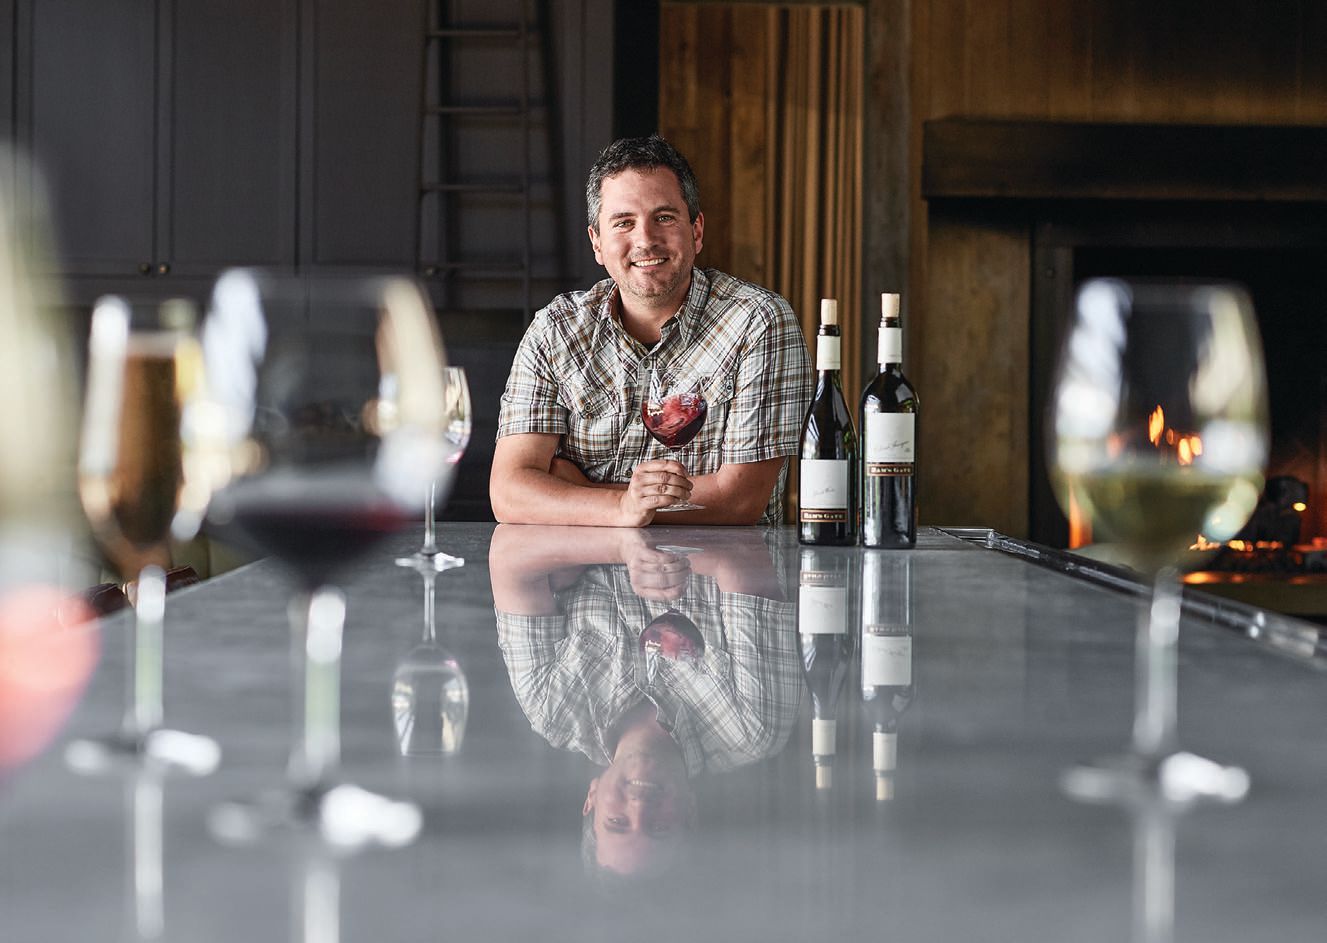 Joe Nielsen is the director of winemaking. PHOTO: BY DAWN HEUMANN